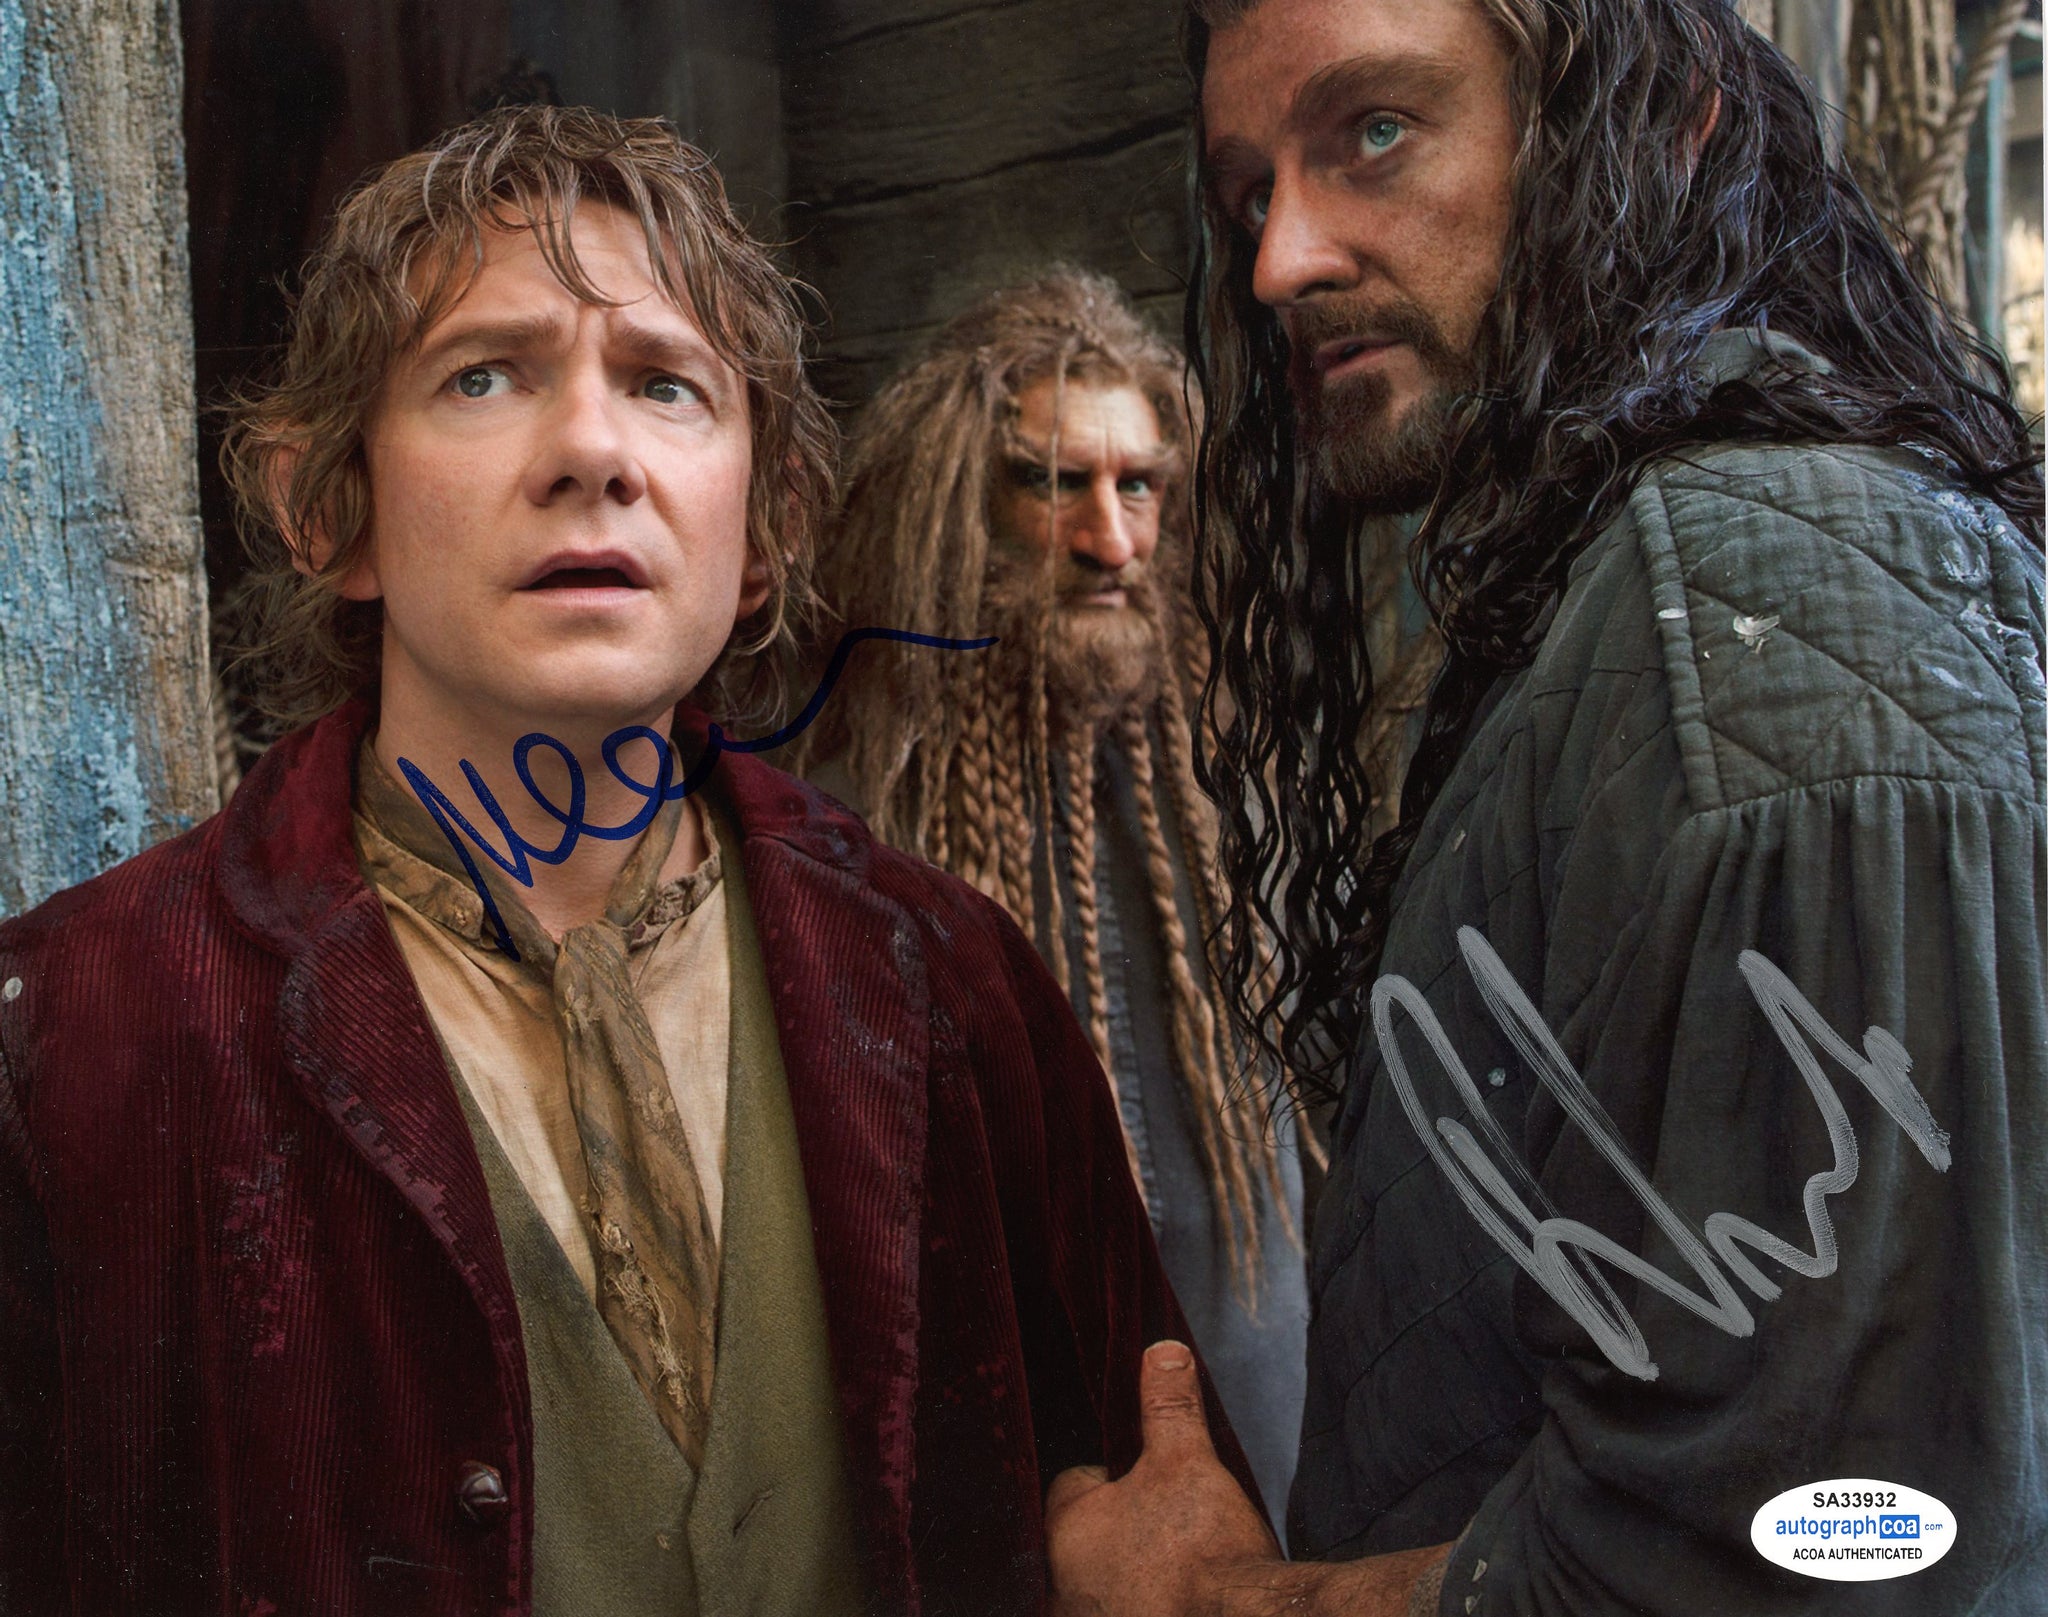 Richard Armitage Martin Freeman The Hobbit Signed Autograph 8x10 Photo ACOA - Outlaw Hobbies Authentic Autographs